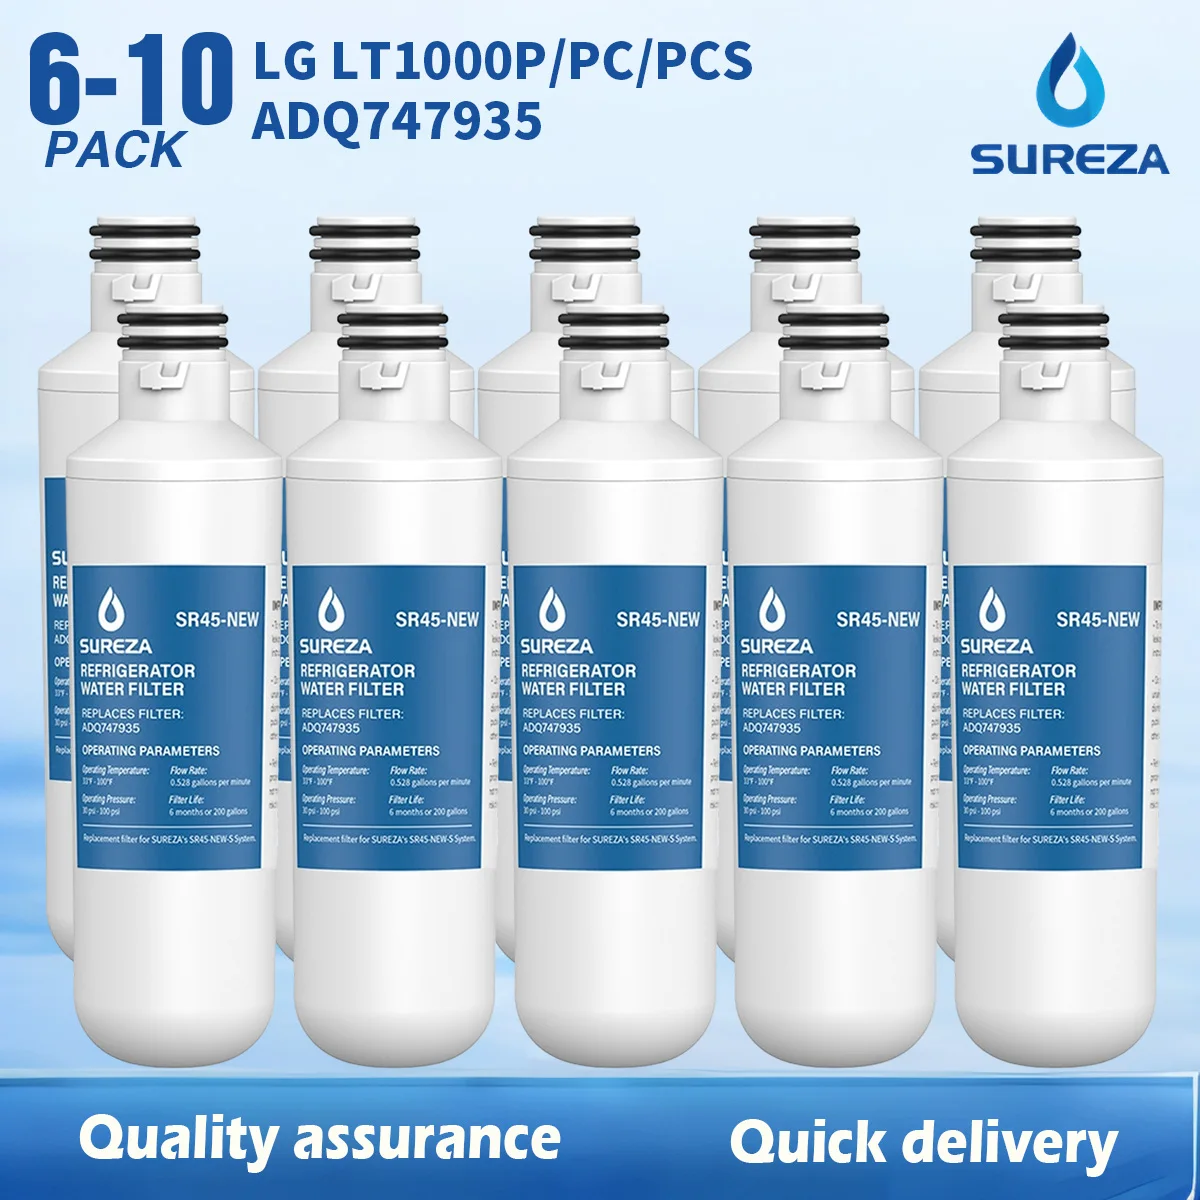 

Replacement LG LT1000P Refrigerator Water Filter LT1000PC LT1000PCS ADQ74793501 MDJ64844601 Kenmore 9980 Water Filter, 6-10 PACK